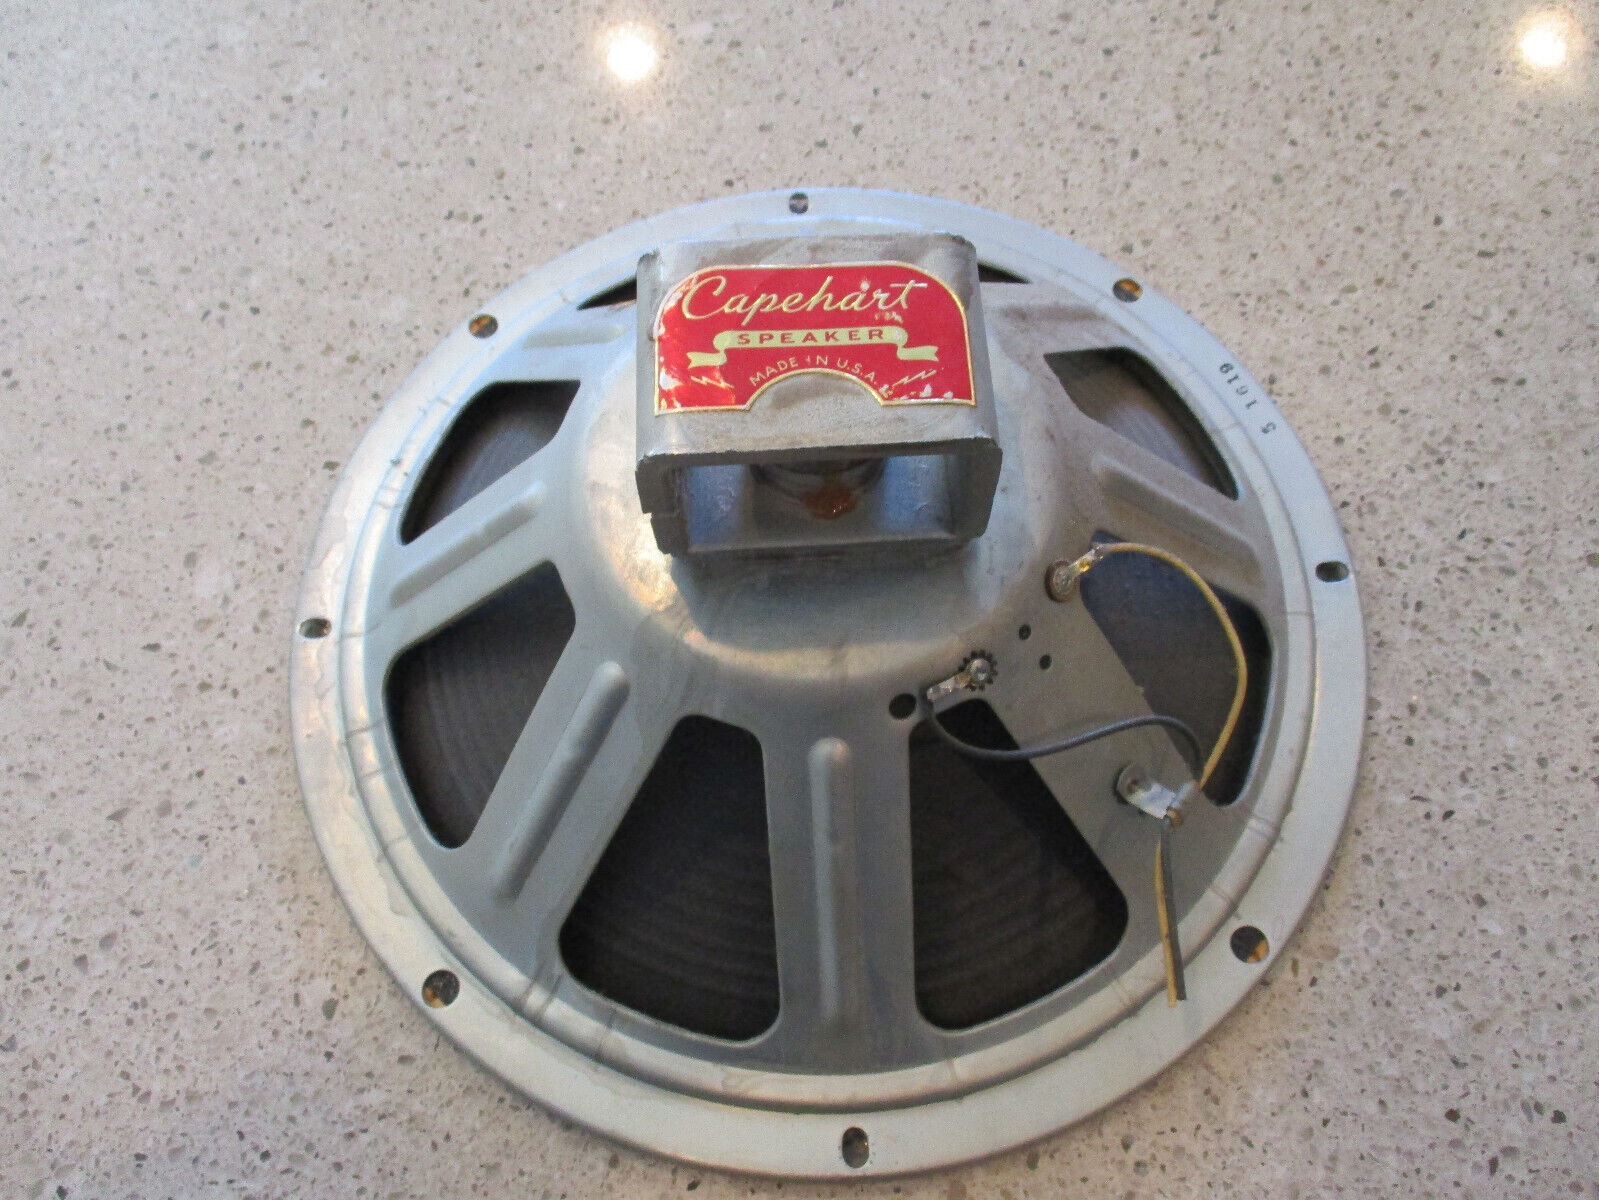 Vintage Jensen Capehart speaker single 12 inch